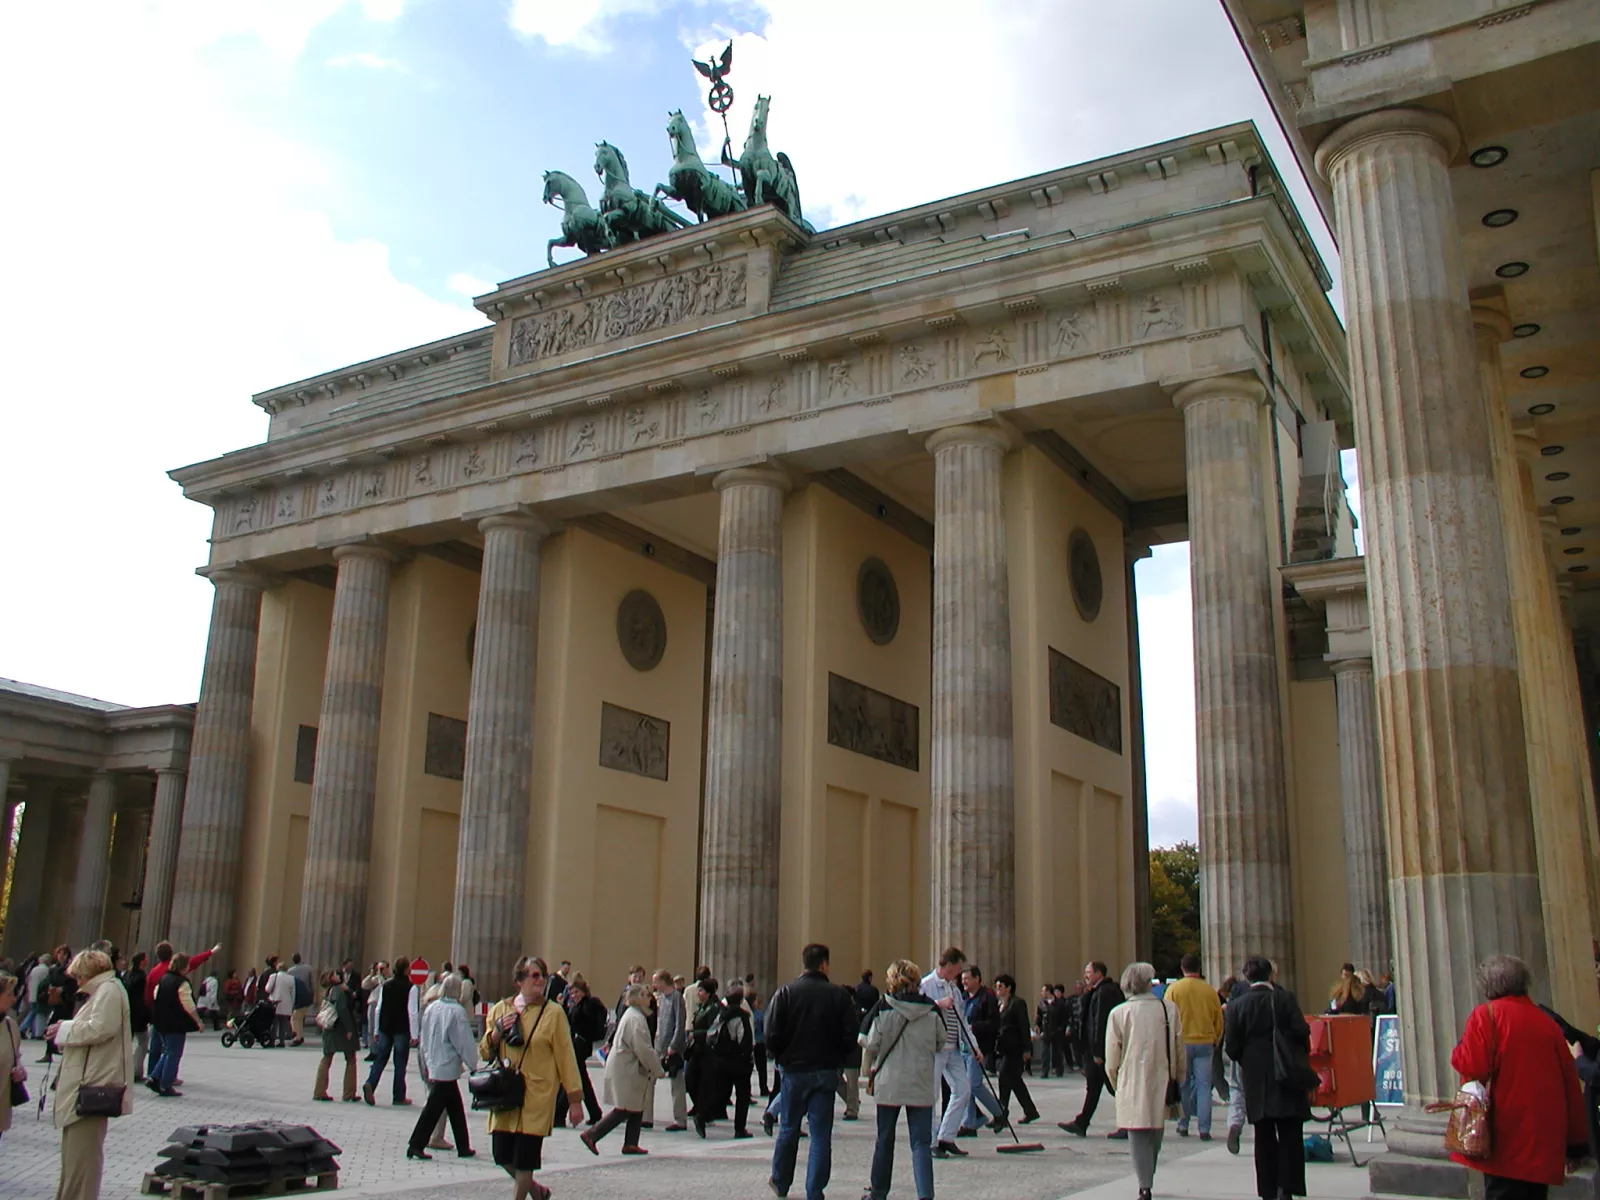 Brandenberg Gate in Berlin